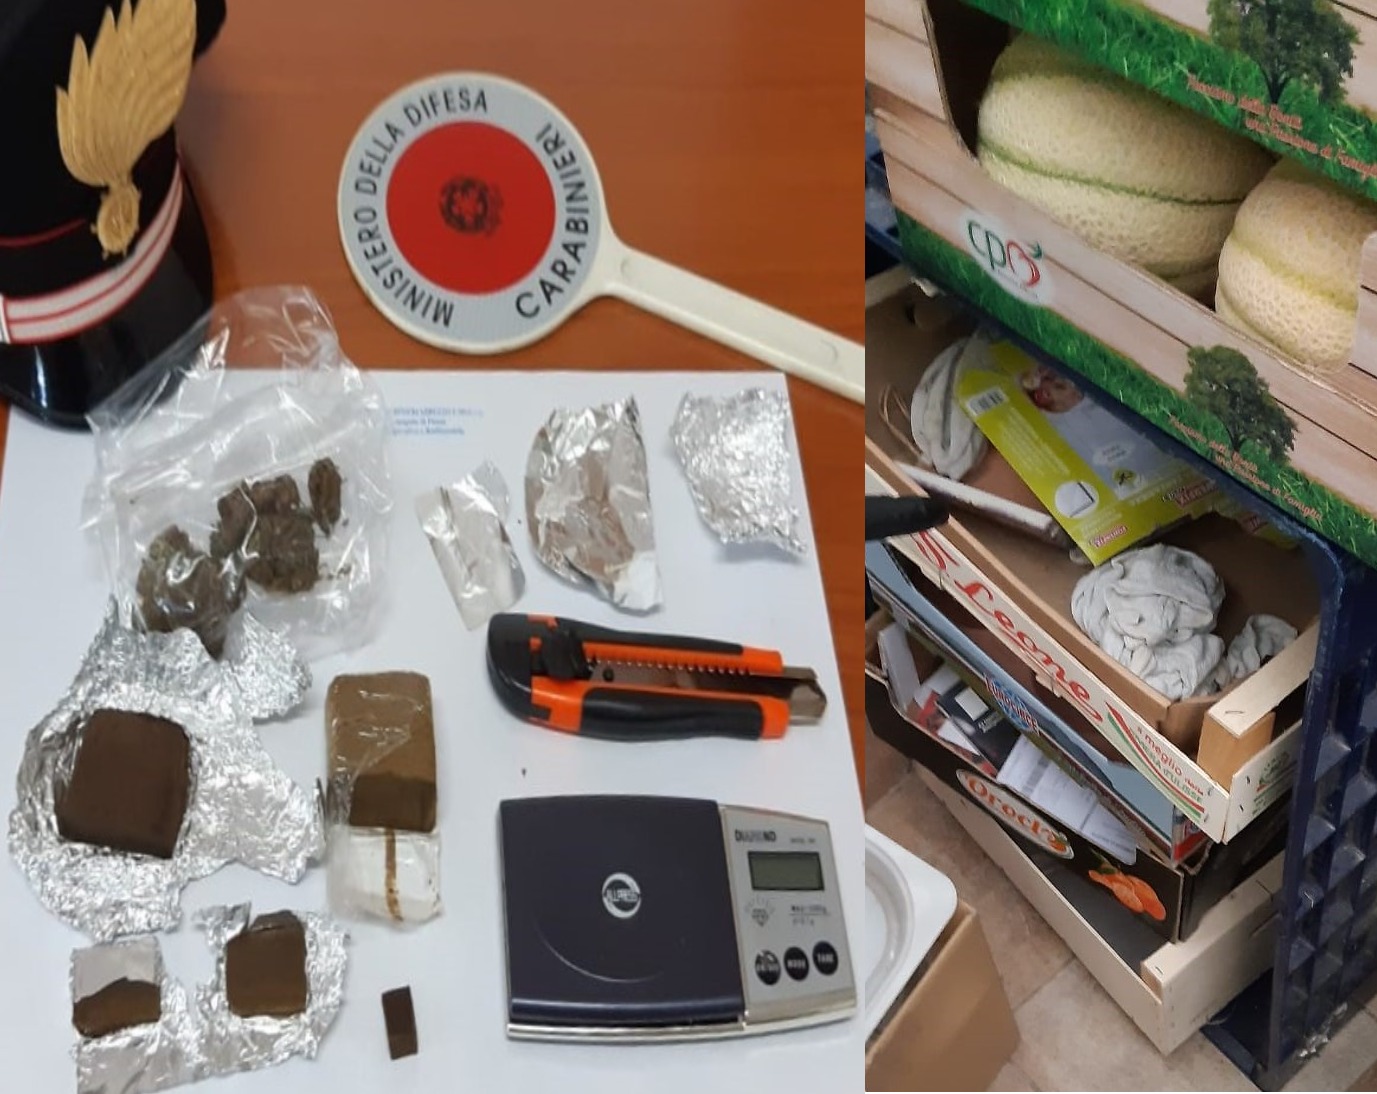 Collecorvino: nascondeva hashish e marijuana tra la frutta, 52enne arrestato